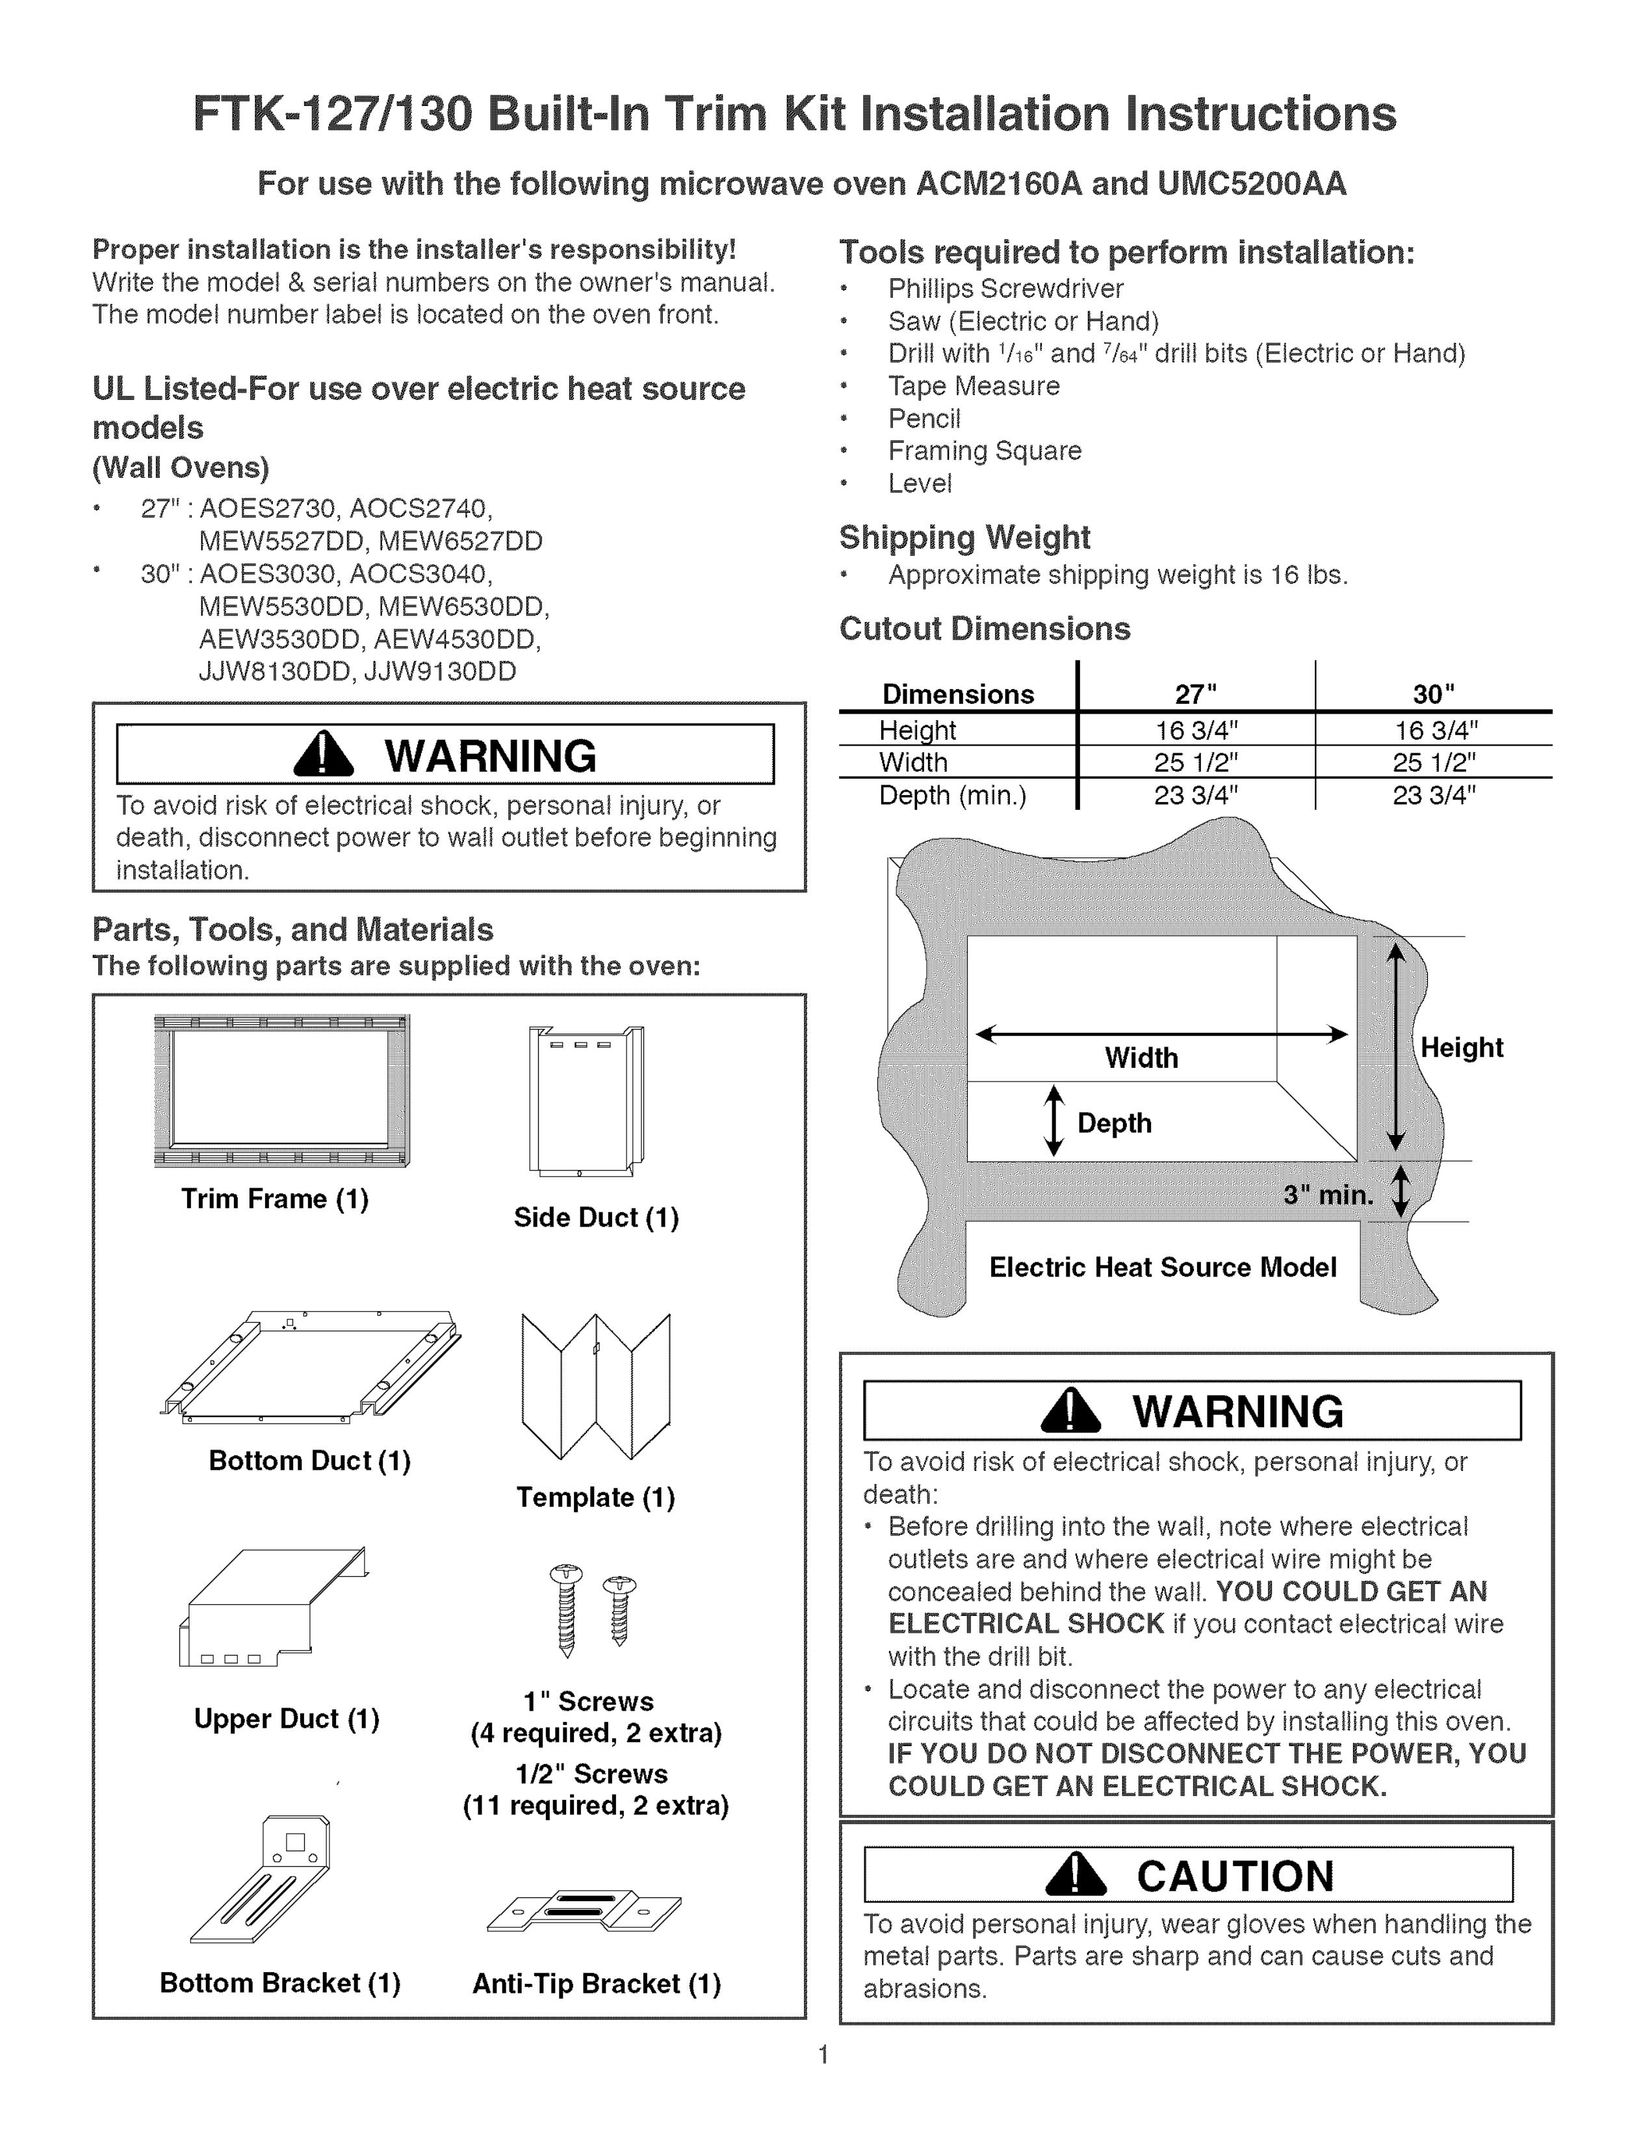 Sears FTK-130 Appliance Trim Kit User Manual